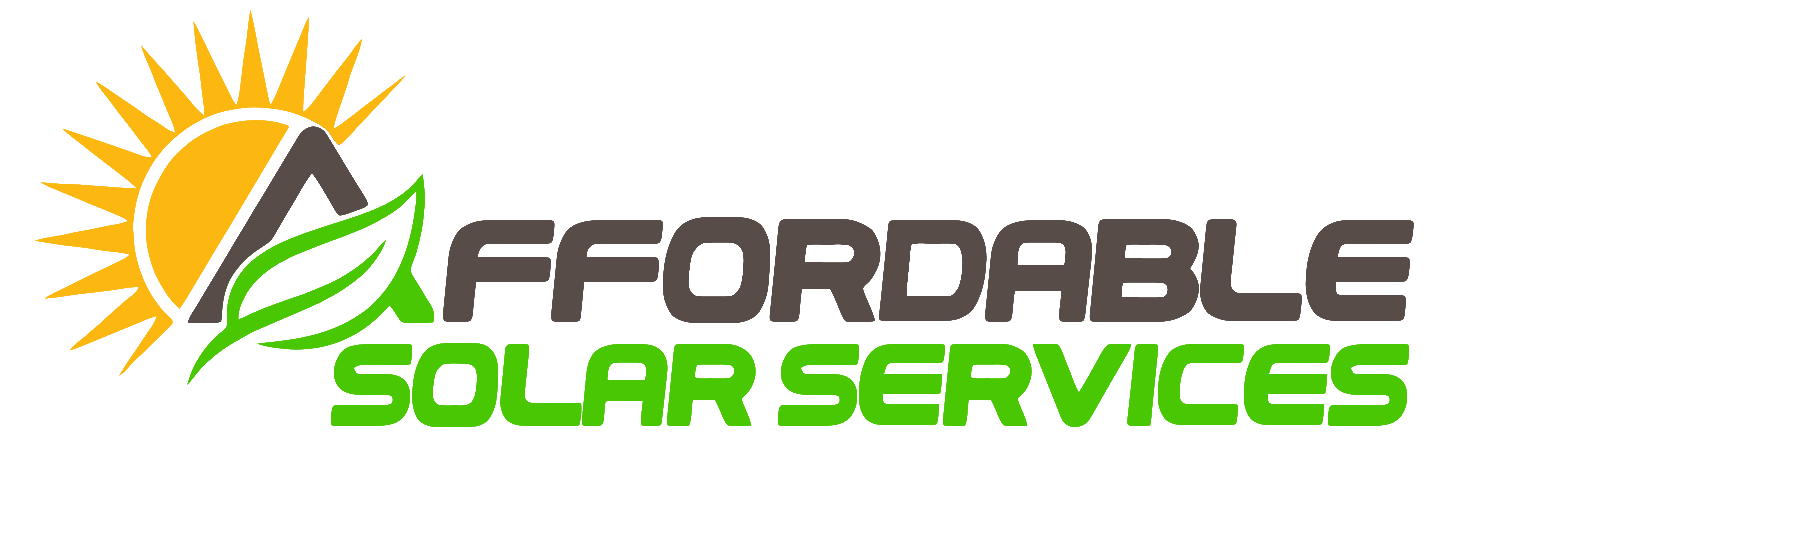 Affordable Solar Services logo